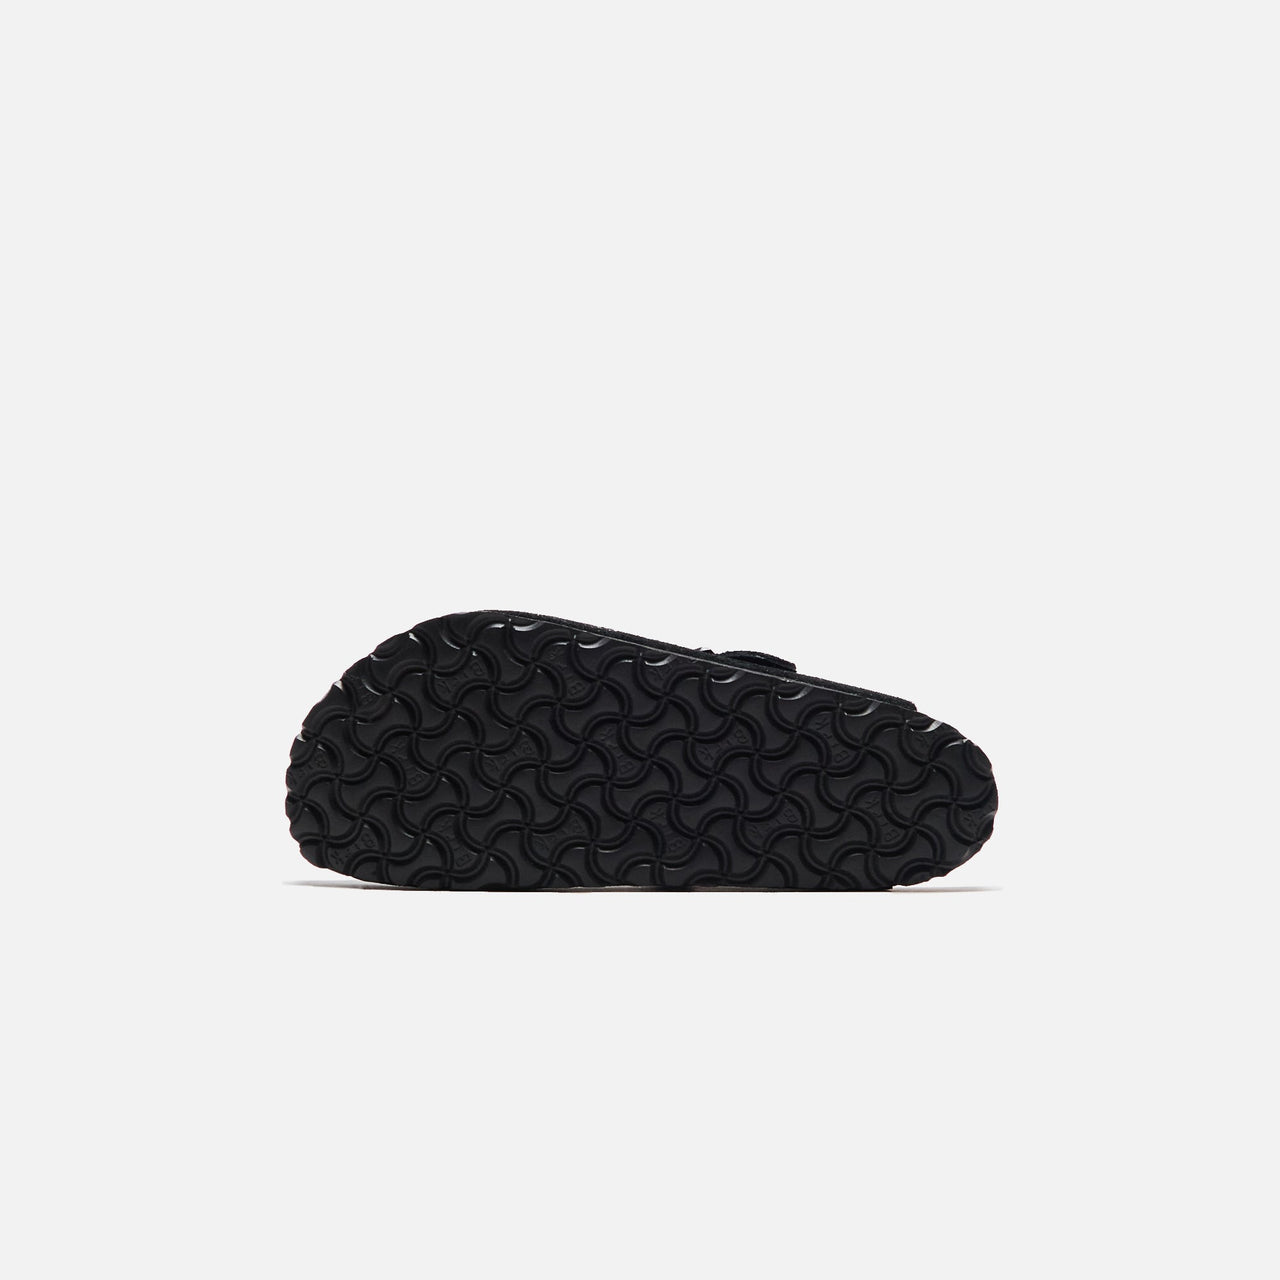 Birkenstock Women's Boston Soft Footbed Suede Black clogs with adjustable buckle strap